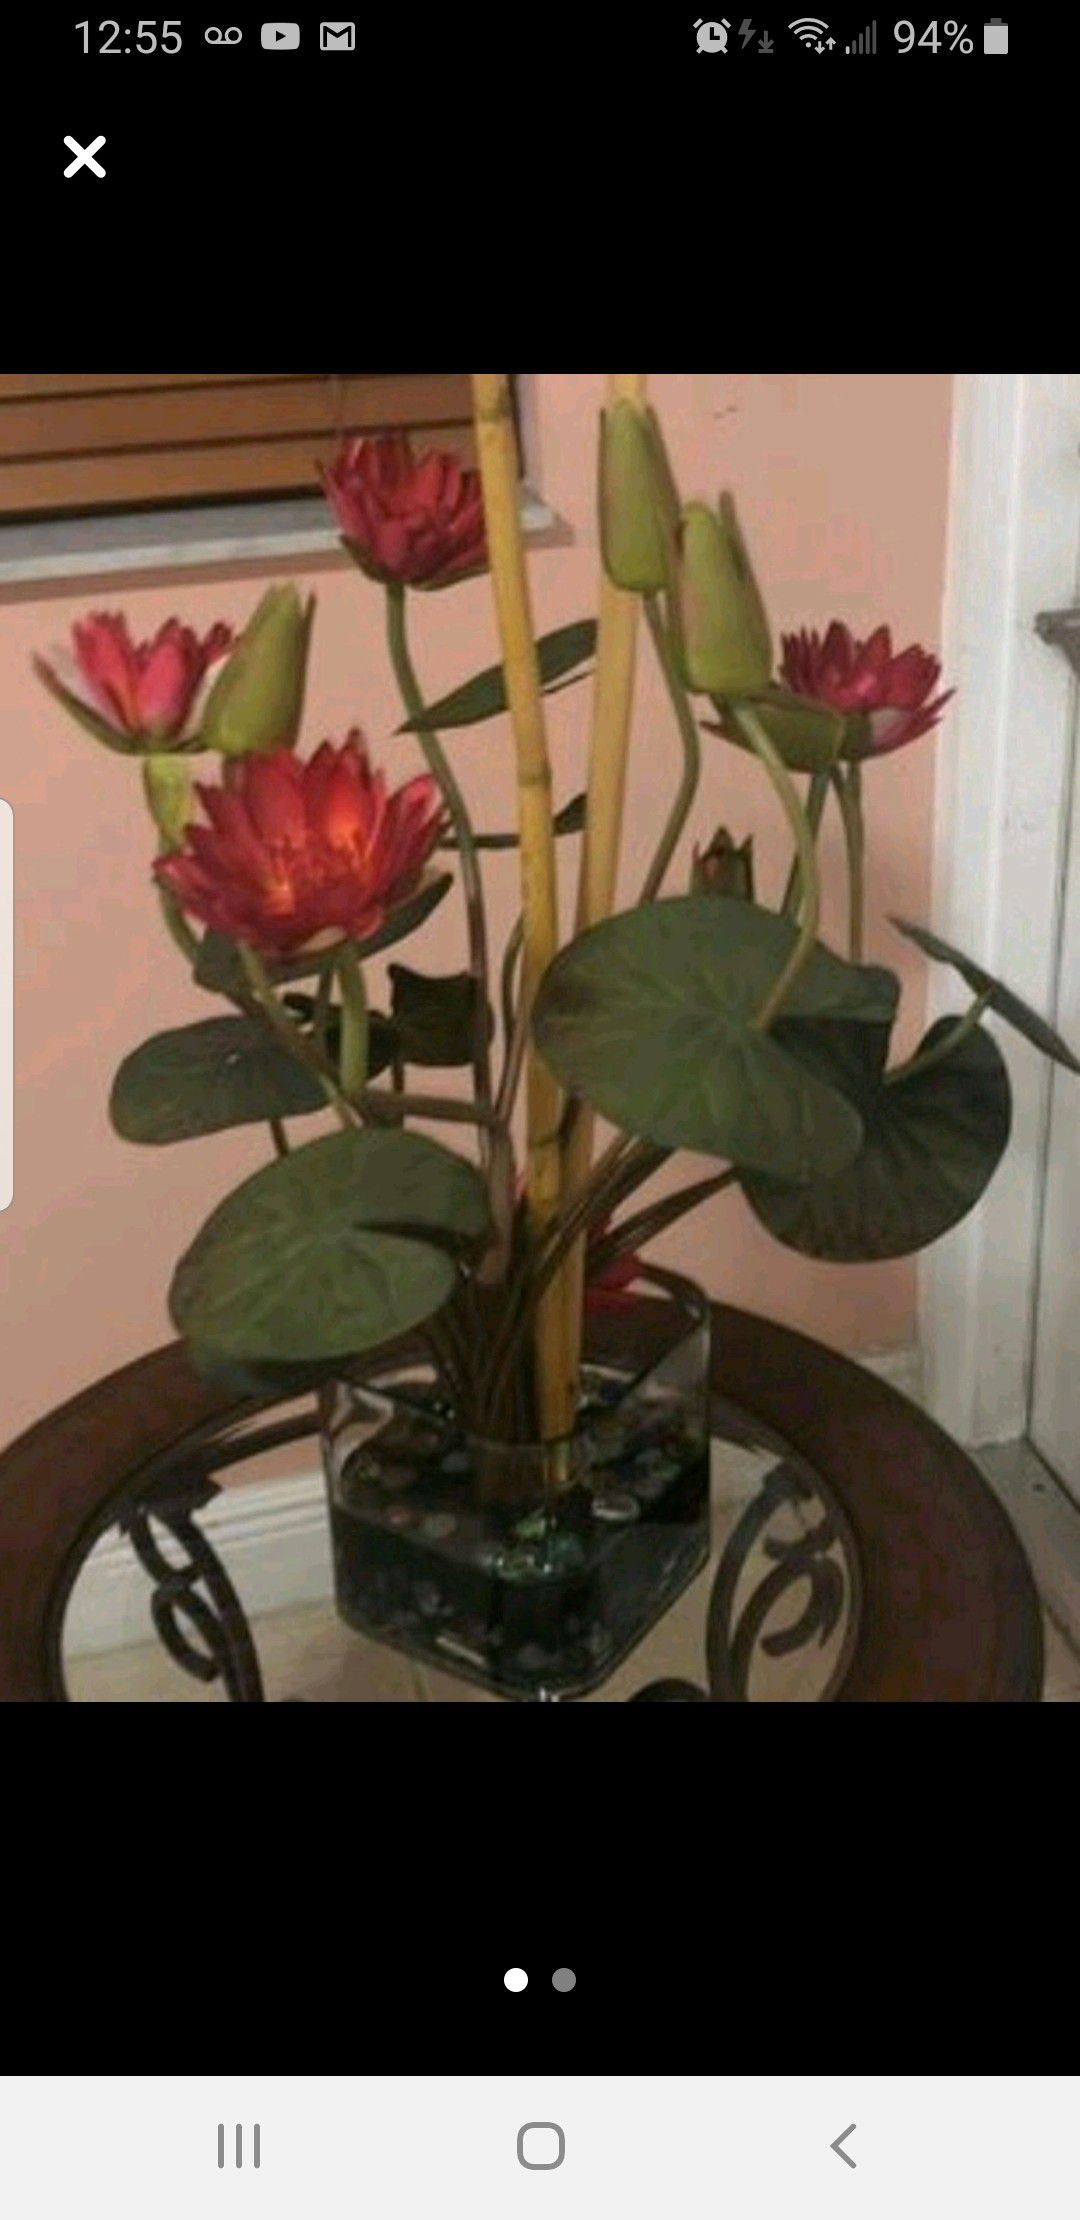 Artificial flowers decor - decoración de flores en vase de cristal Condition: Good